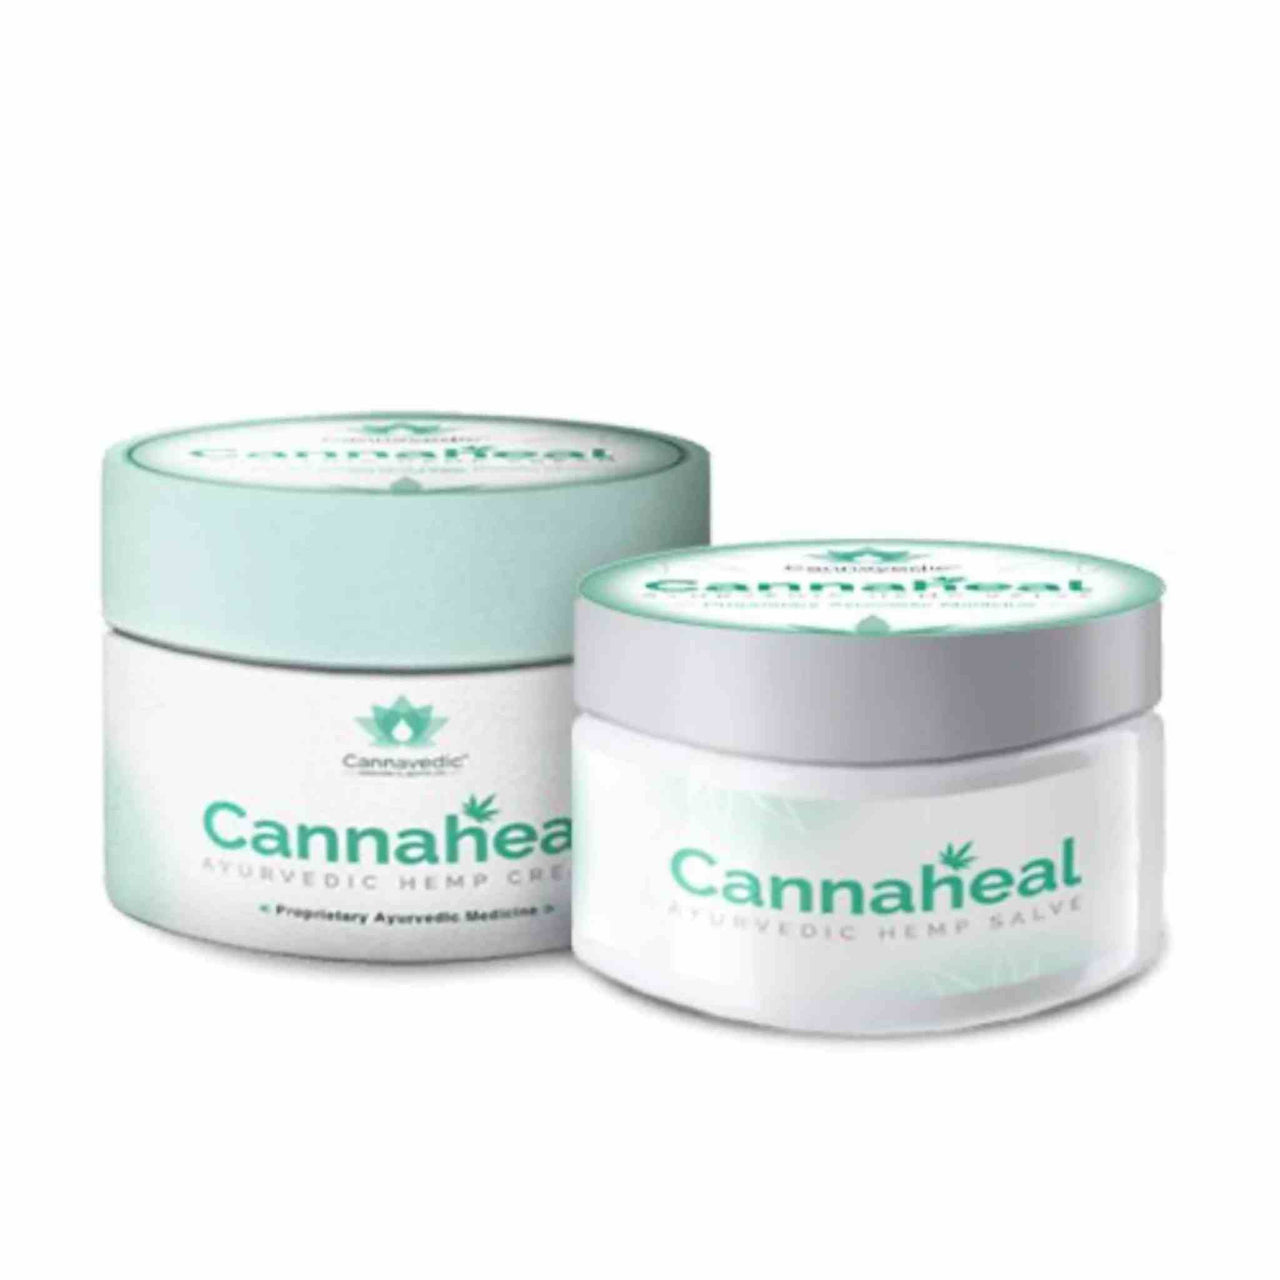 Cannavedic - Cannaheal Skin Infection Cream